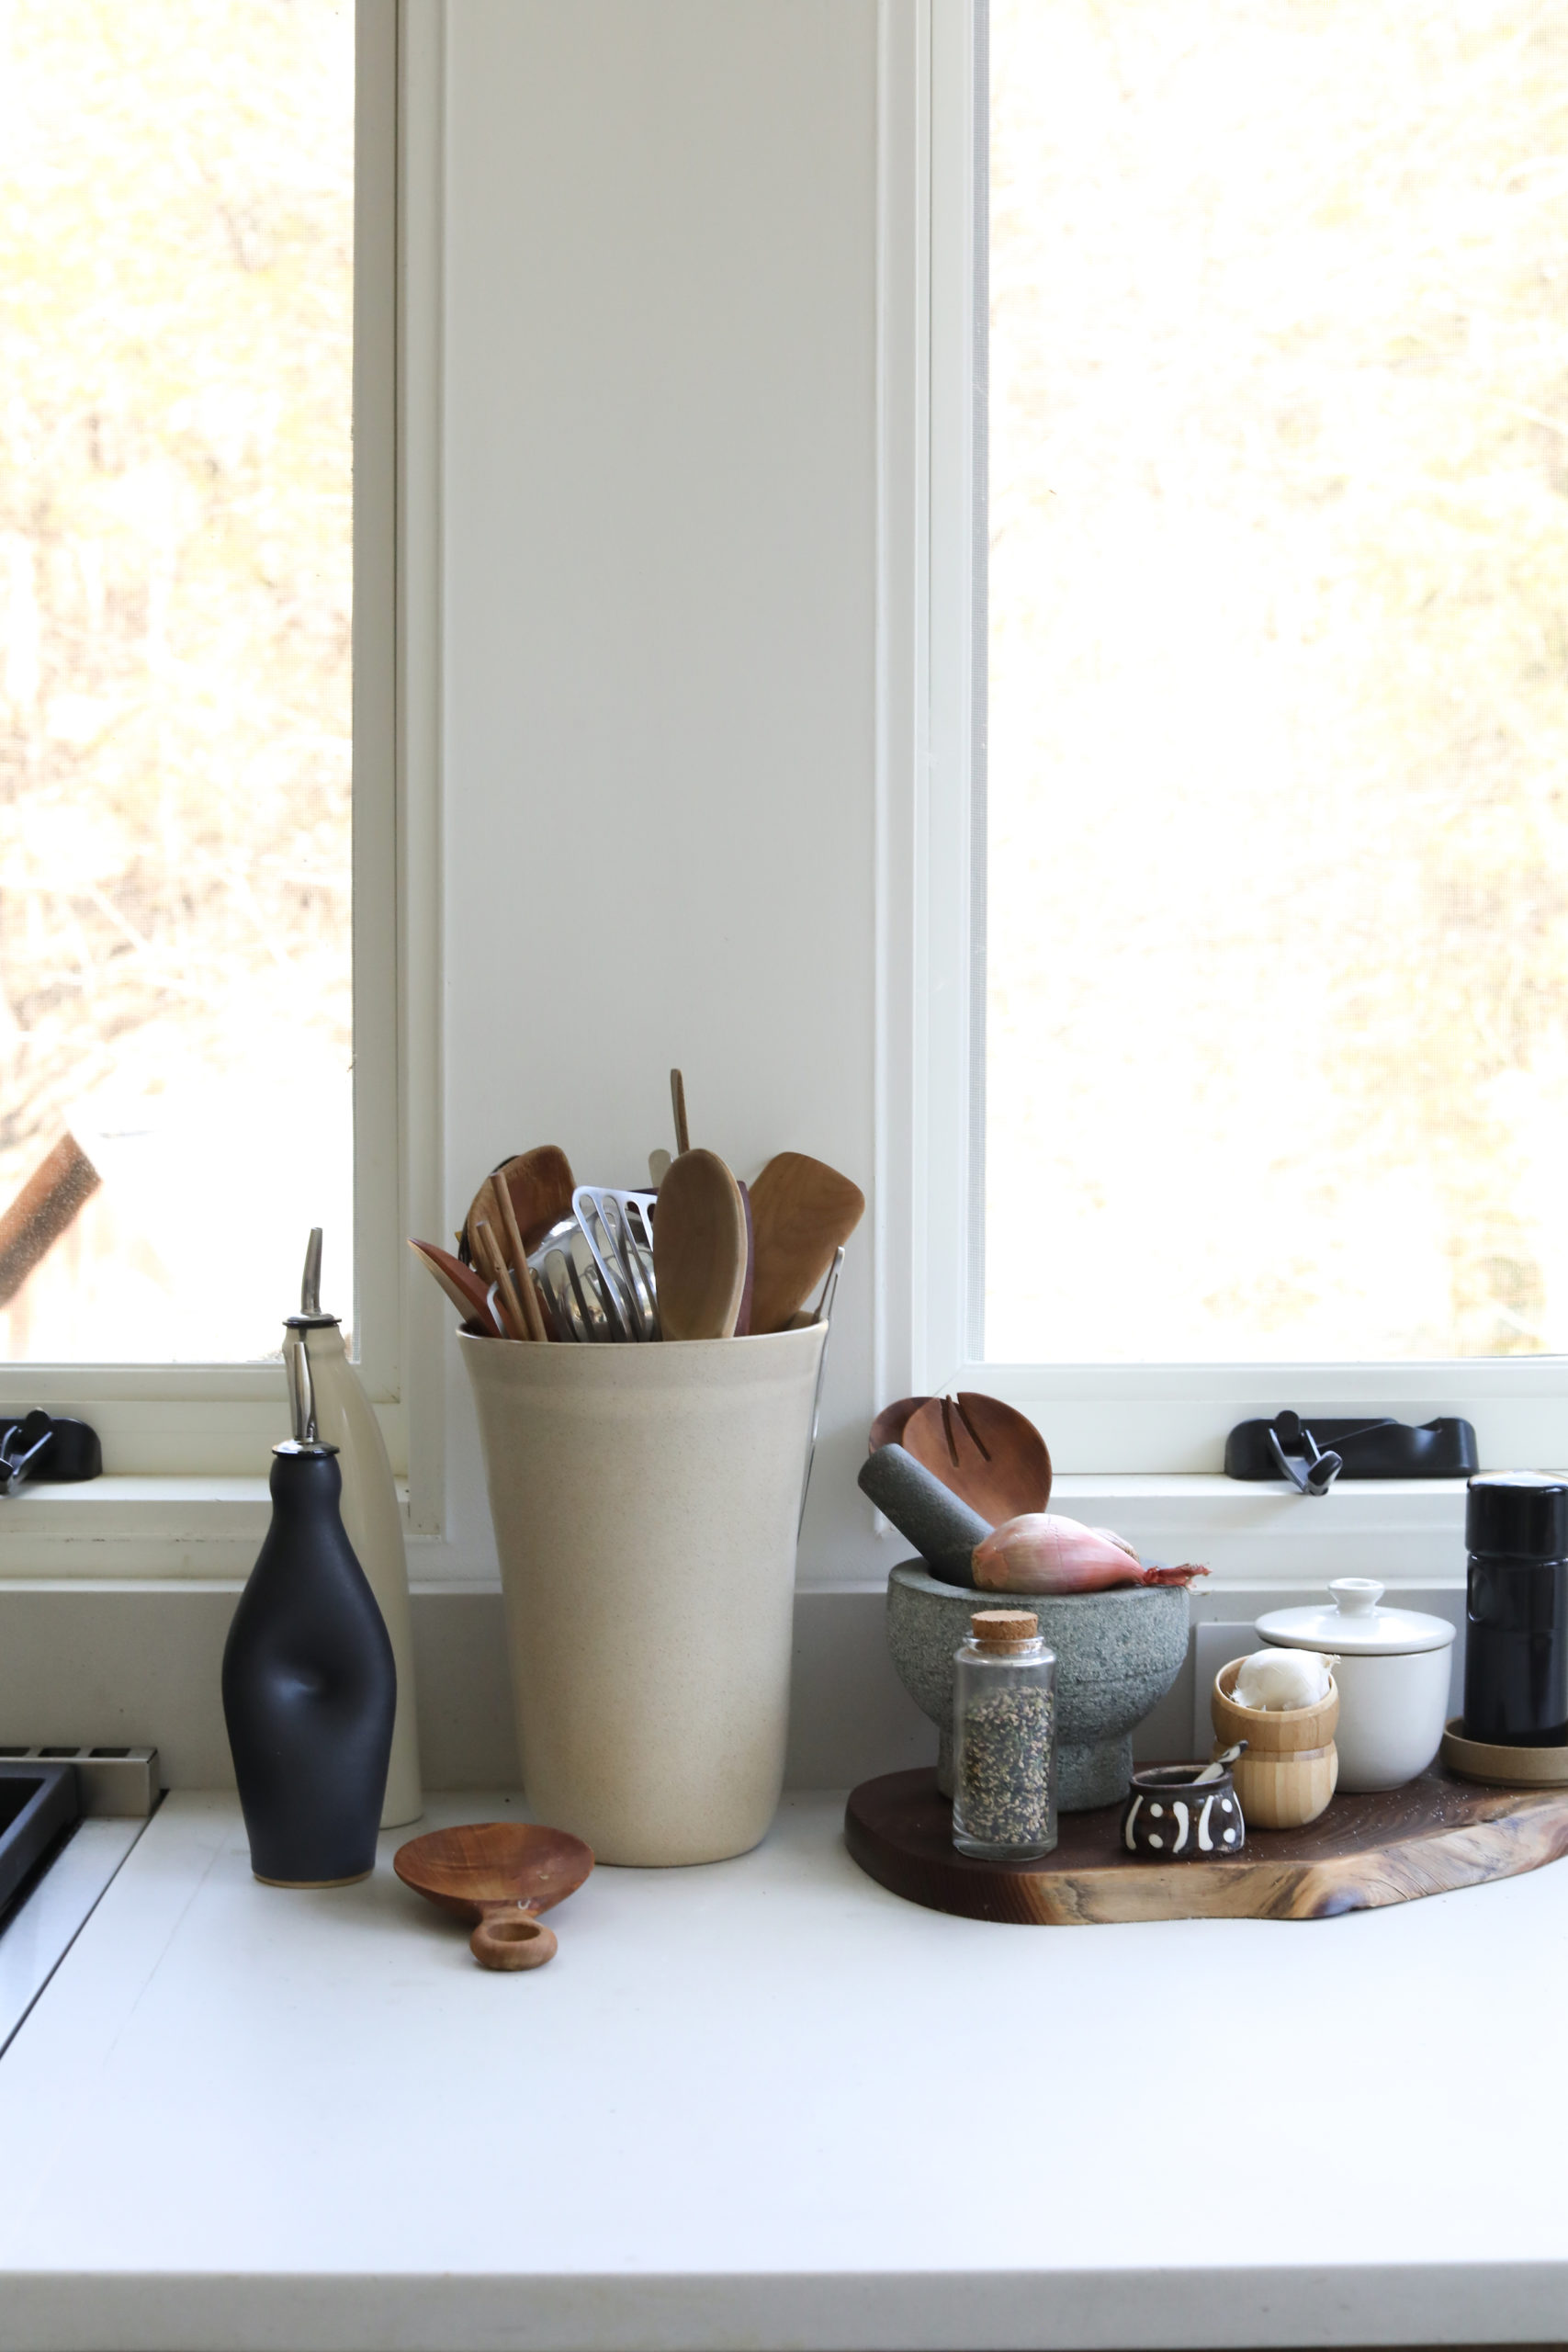 Kitchen Essentials: The Basics - The Cooking Jar